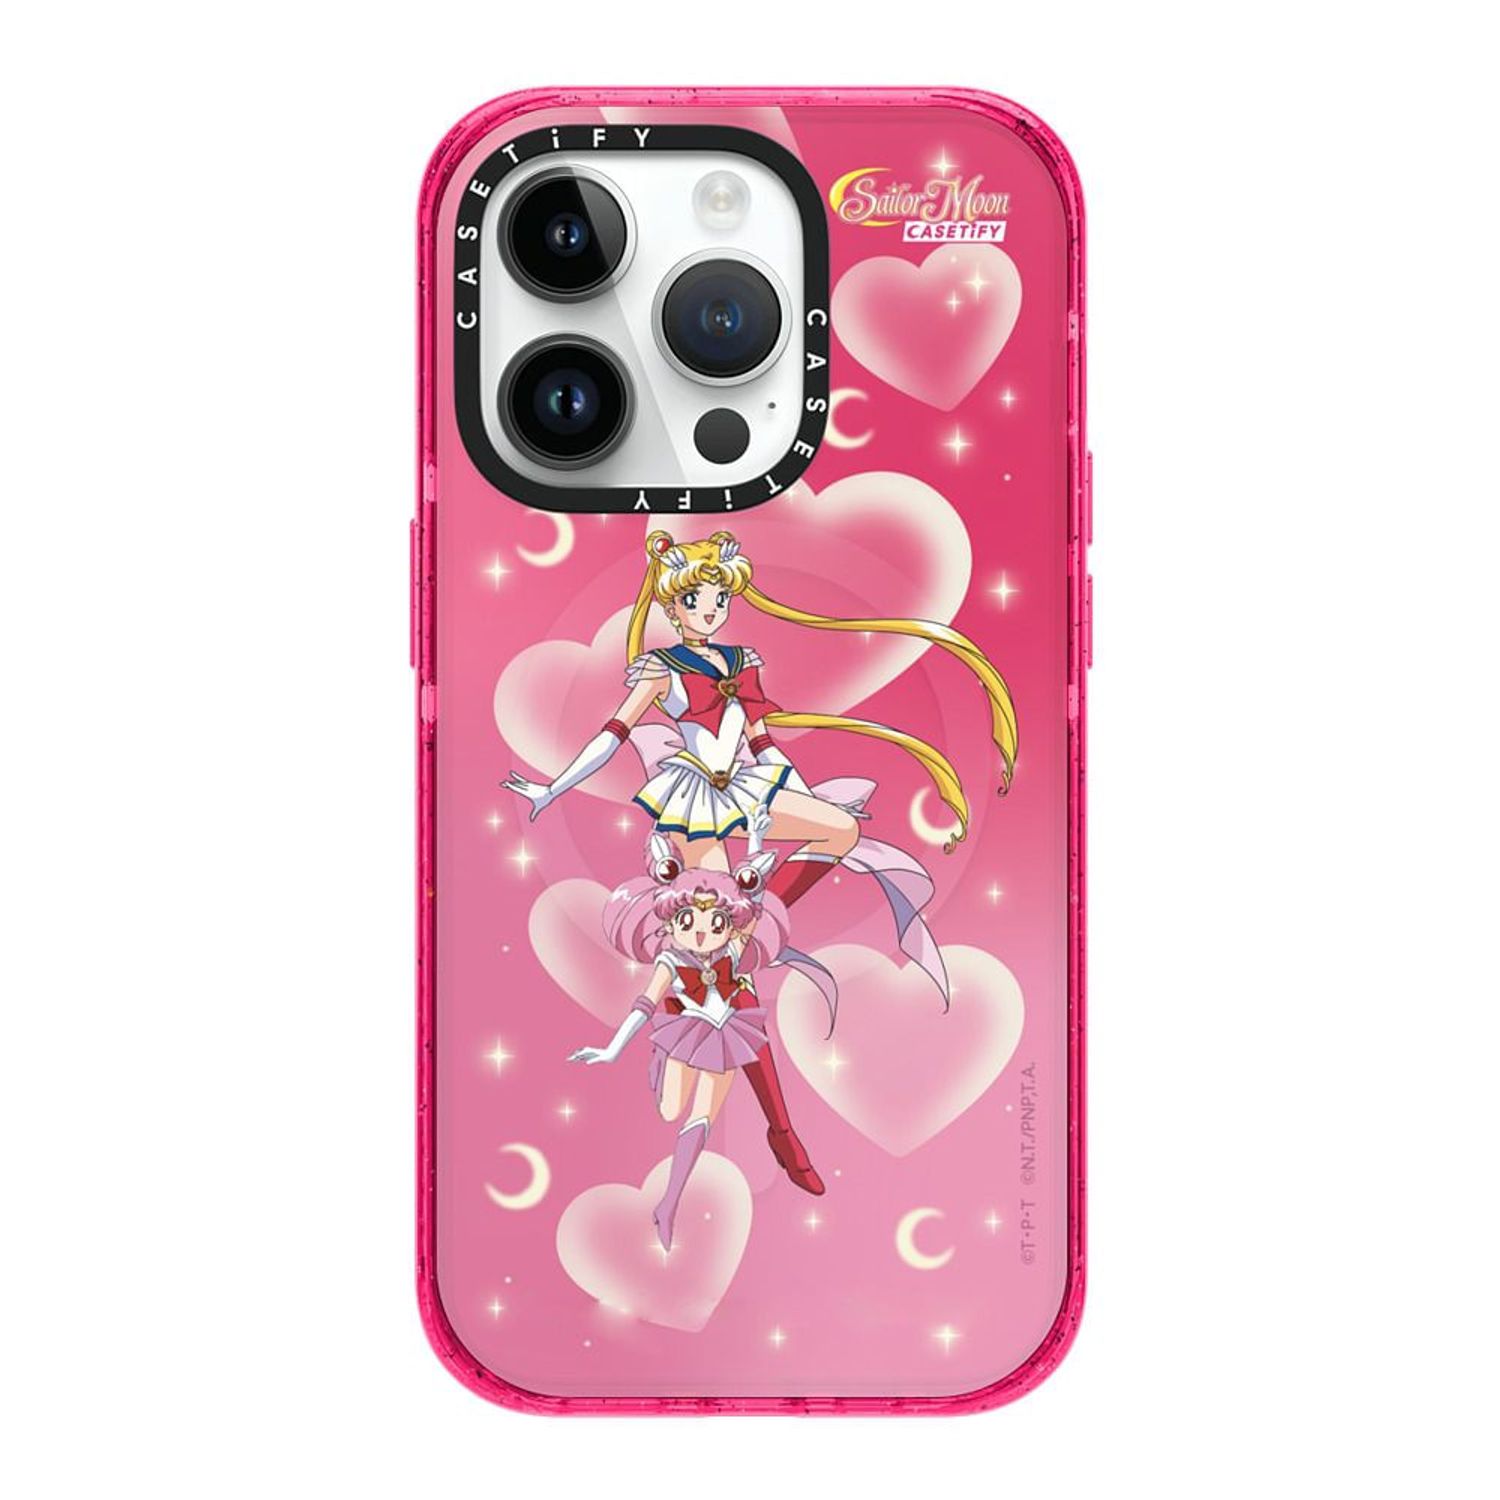 Case ScreenShop Para iPhone 14 Pro Sailor Moon & Chibi Moon Fucsia Casetify  - Oechsle